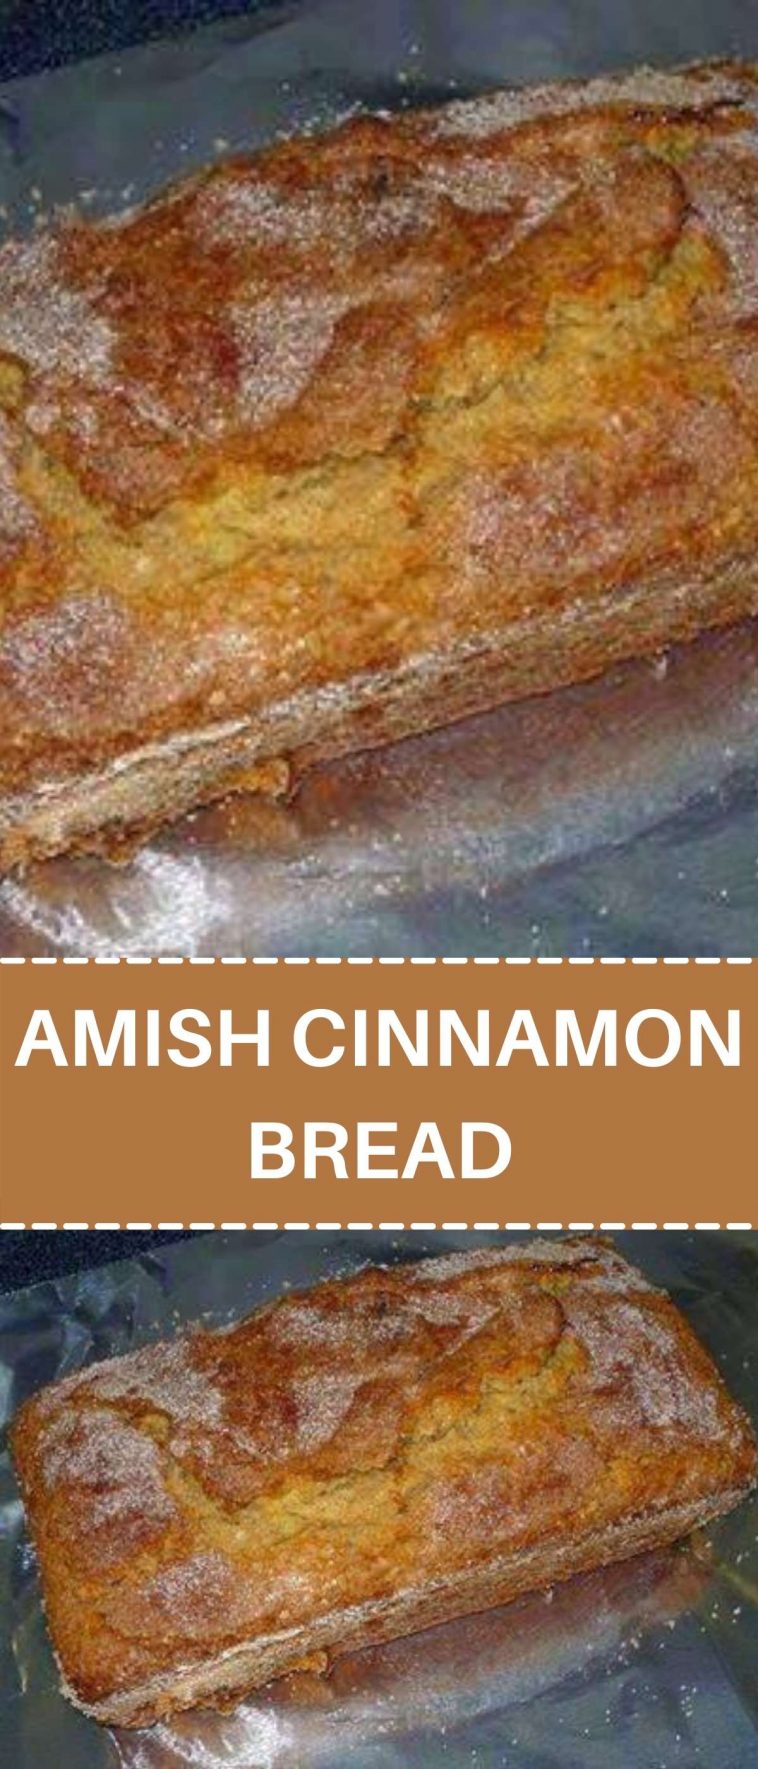 AMISH CINNAMON BREAD